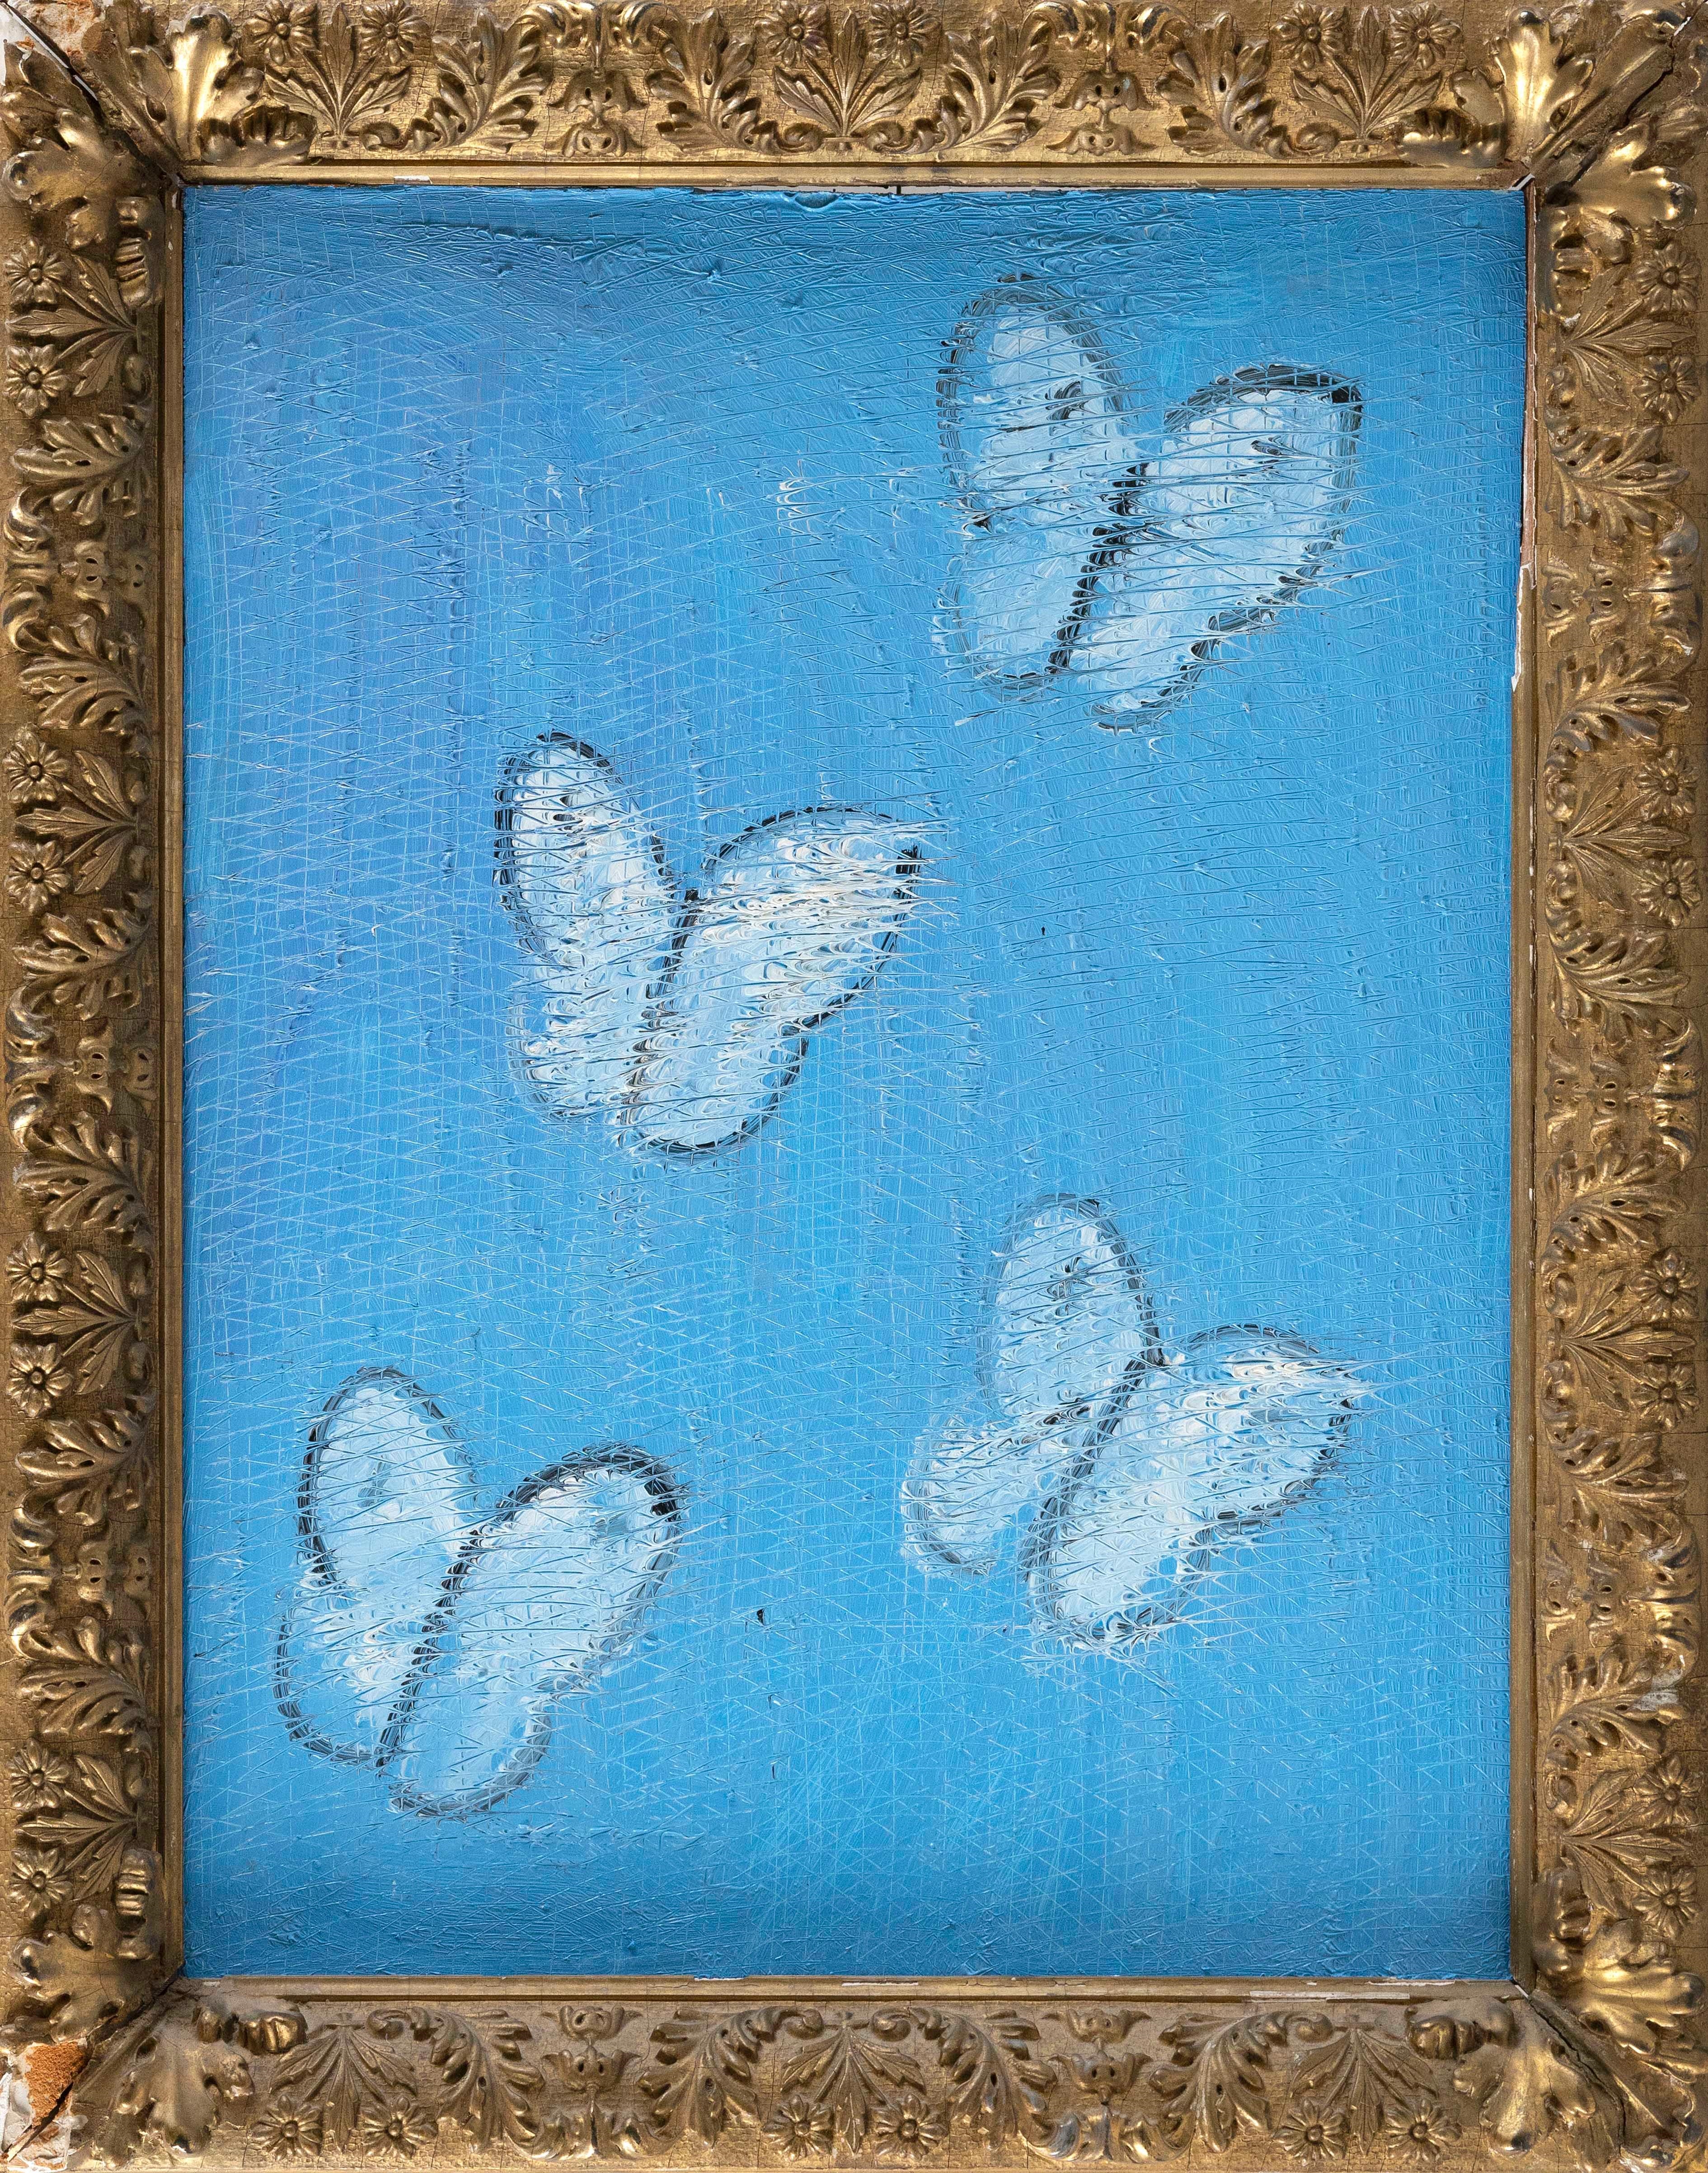 Hunt Slonem, White Butterflies Dallas (2022), Available for Sale